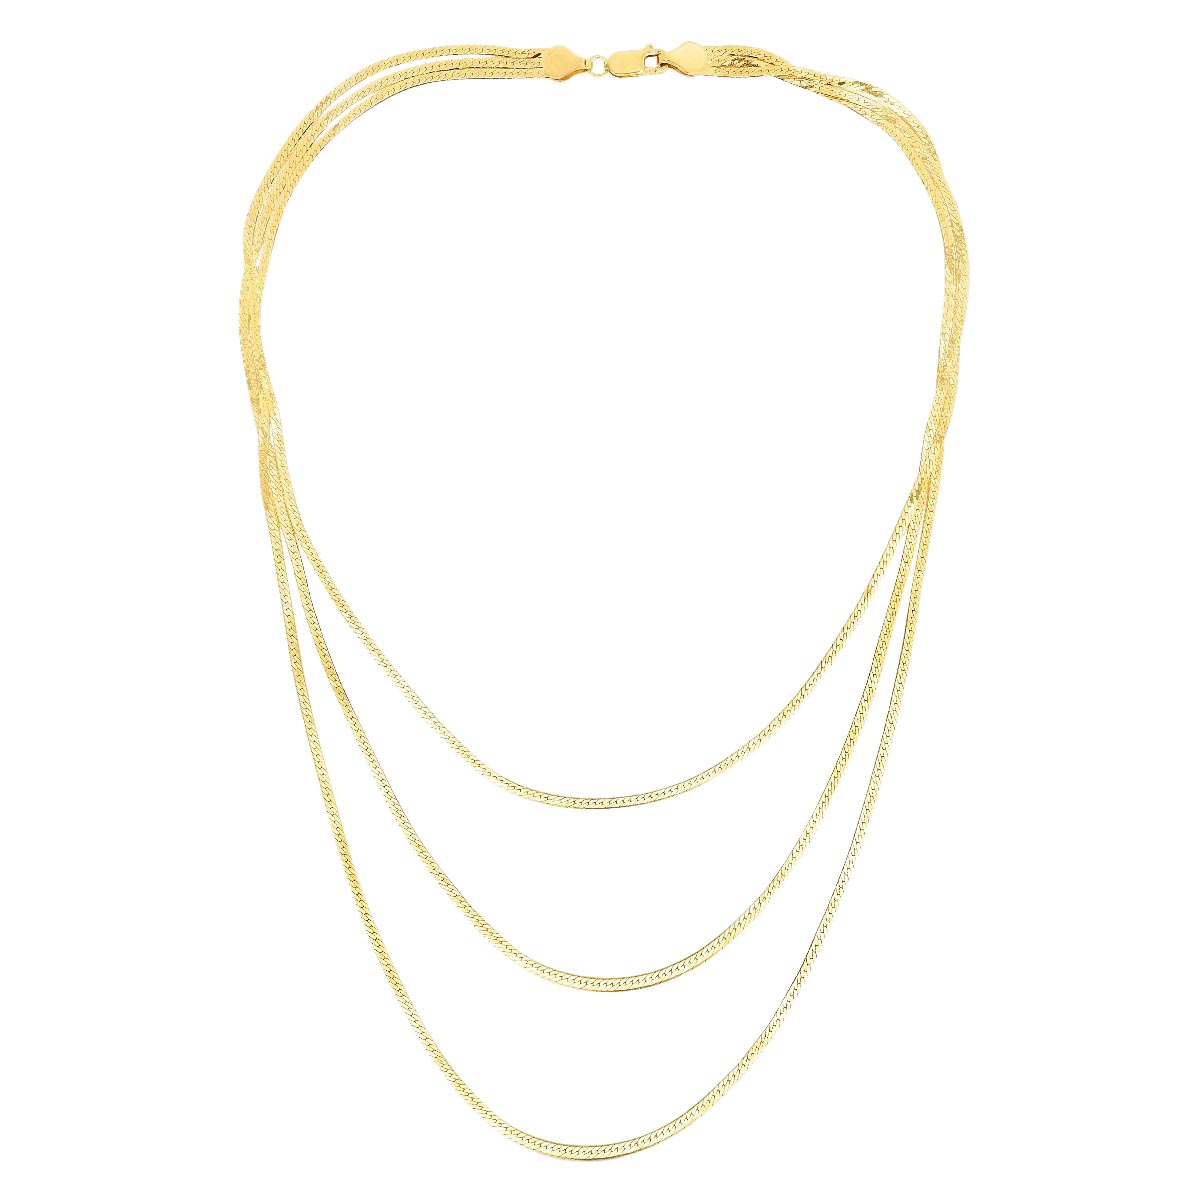 Multi Strand Herringbone Necklace in 14kt Yellow Gold